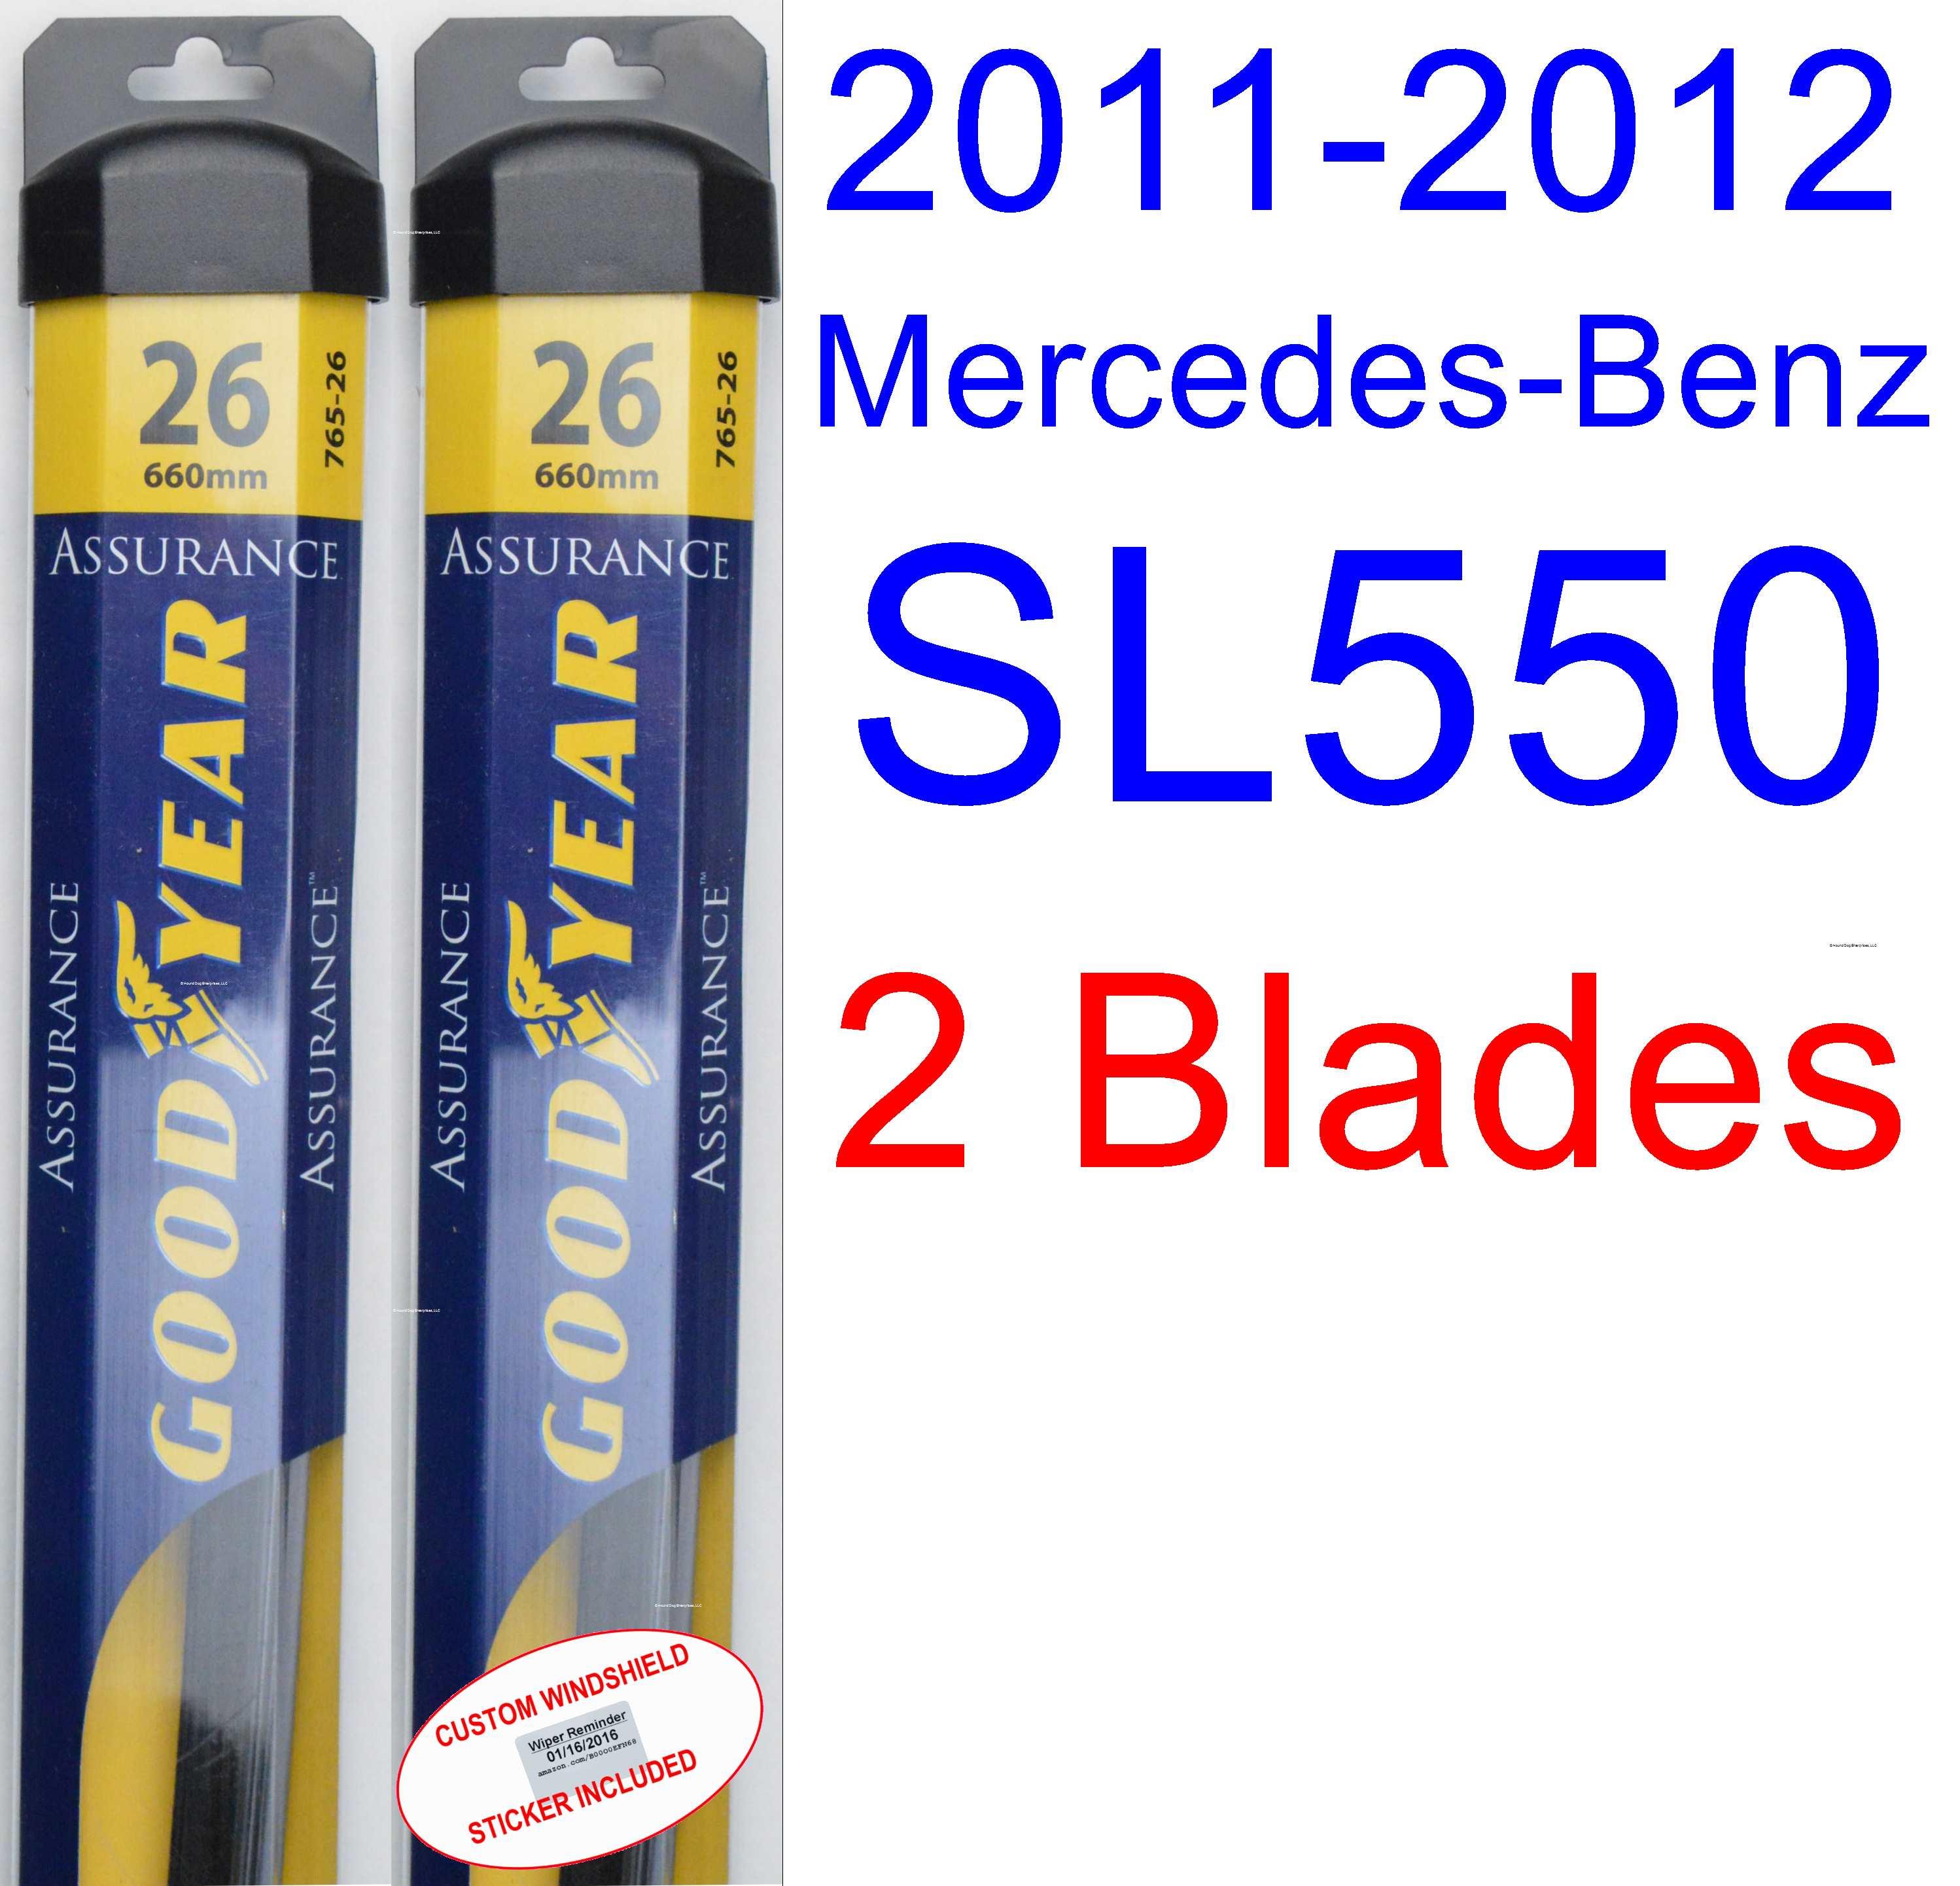 2011 2012 Mercedes Benz SL550 Replacement Wiper Blade Set/Kit (Set of 2 Blades) (Goodyear Wiper Blades Assurance)